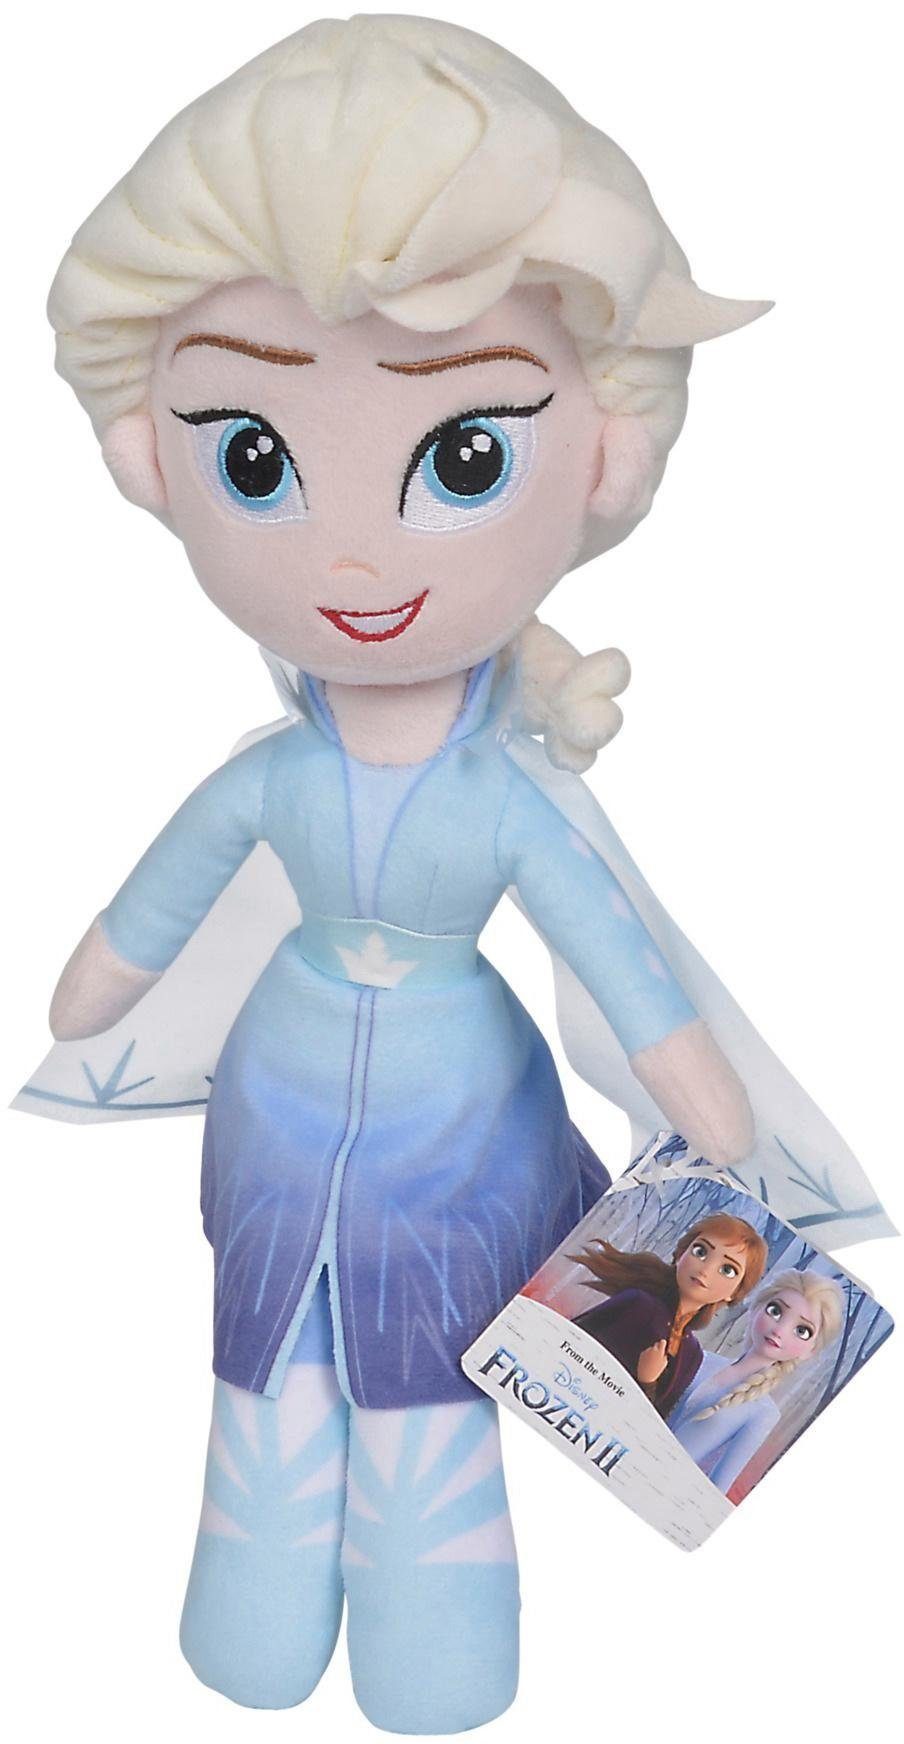 SIMBA Plüschfigur Disney Frozen 2, Elsa, 30 cm